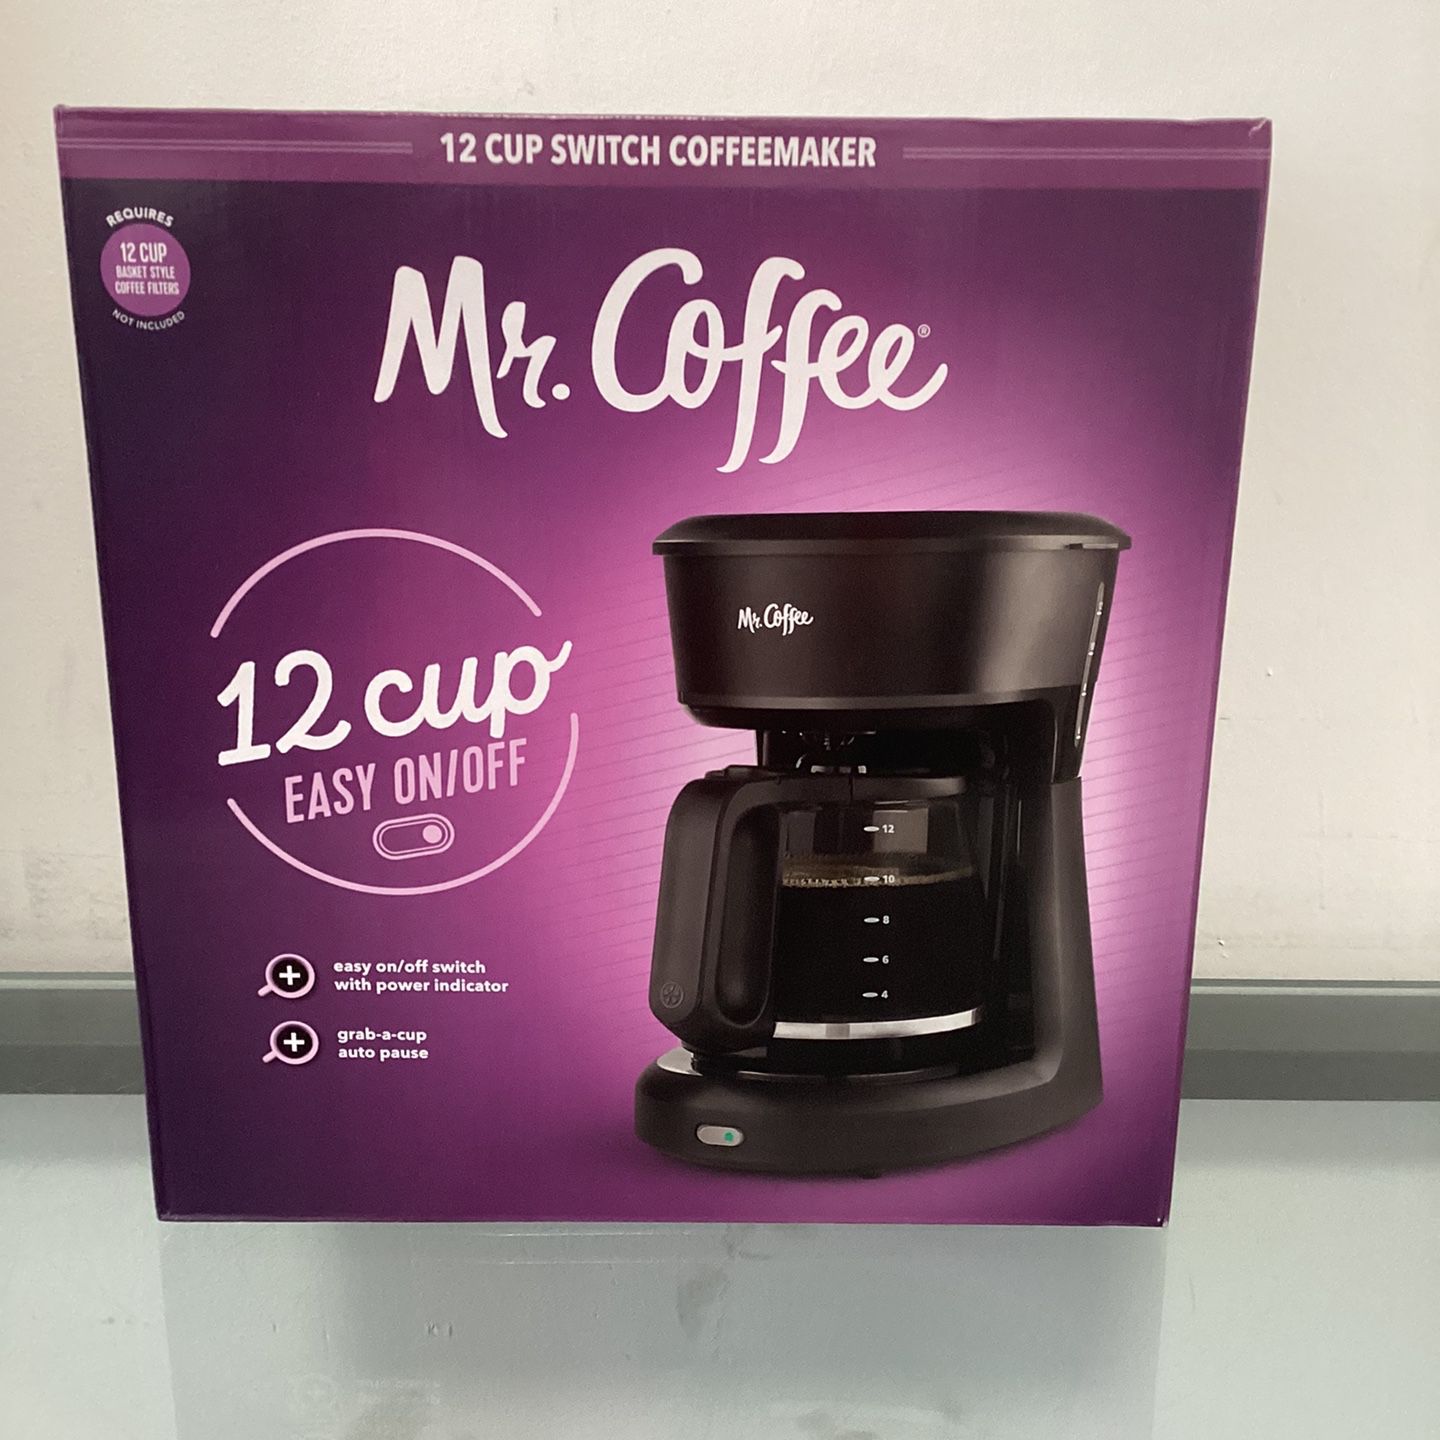 Mr. Coffee Cafe Barista for Sale in Pt Orange, FL - OfferUp